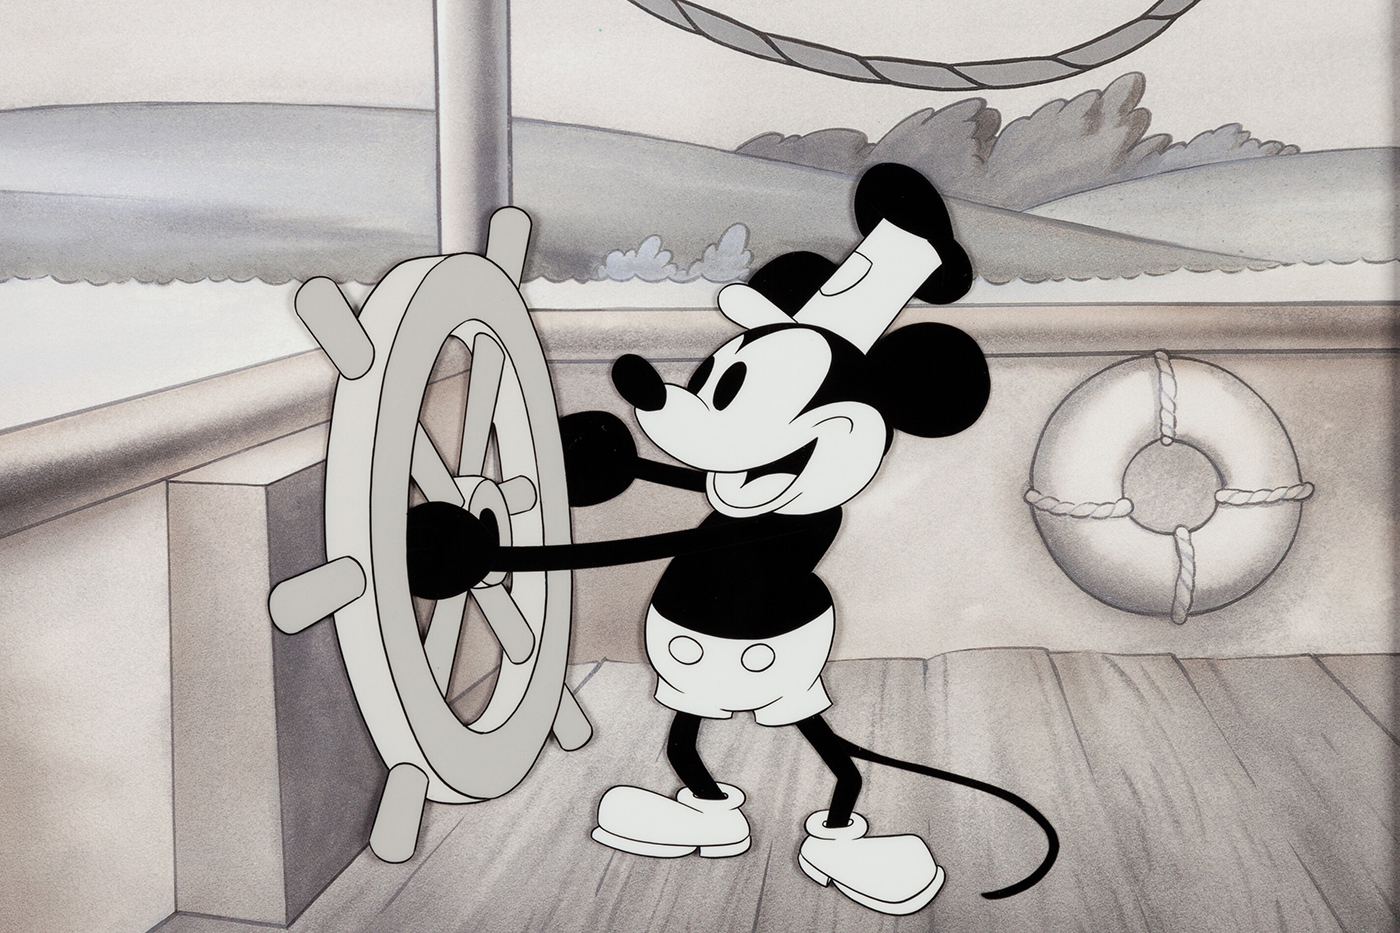 Mickey Mouse in Public Domain: Copyright vs Trademark